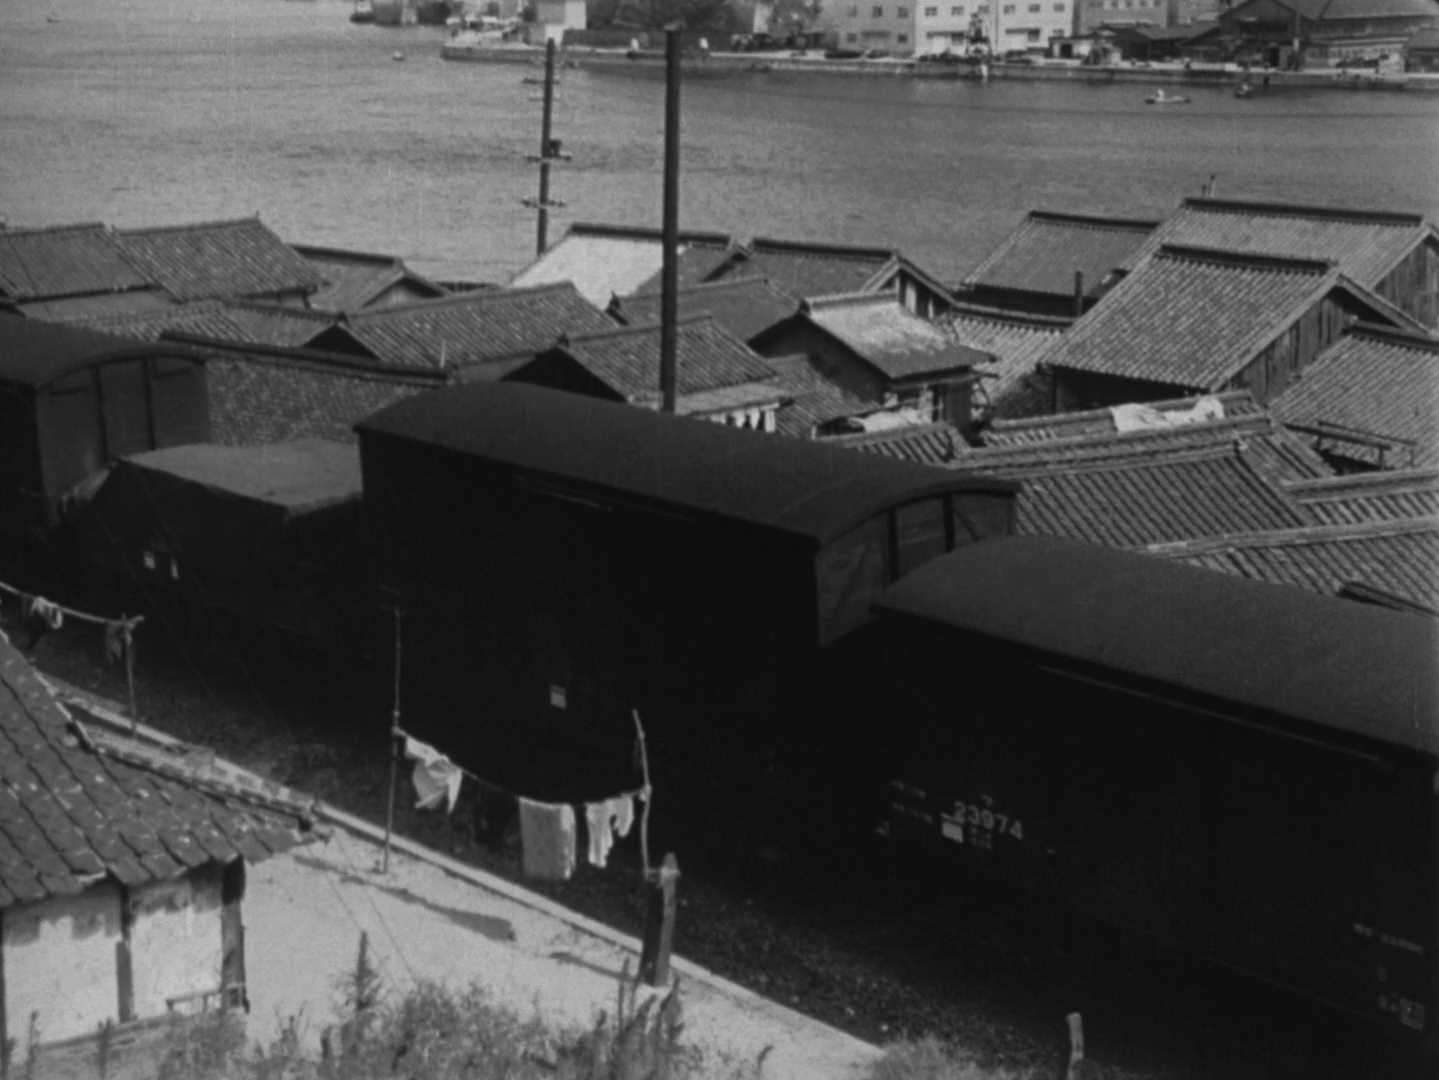 Tokyo Story - Tokyo monogatari - Yasujiro Ozu - pillow shot - train - roofs - water - inlet - Onomichi